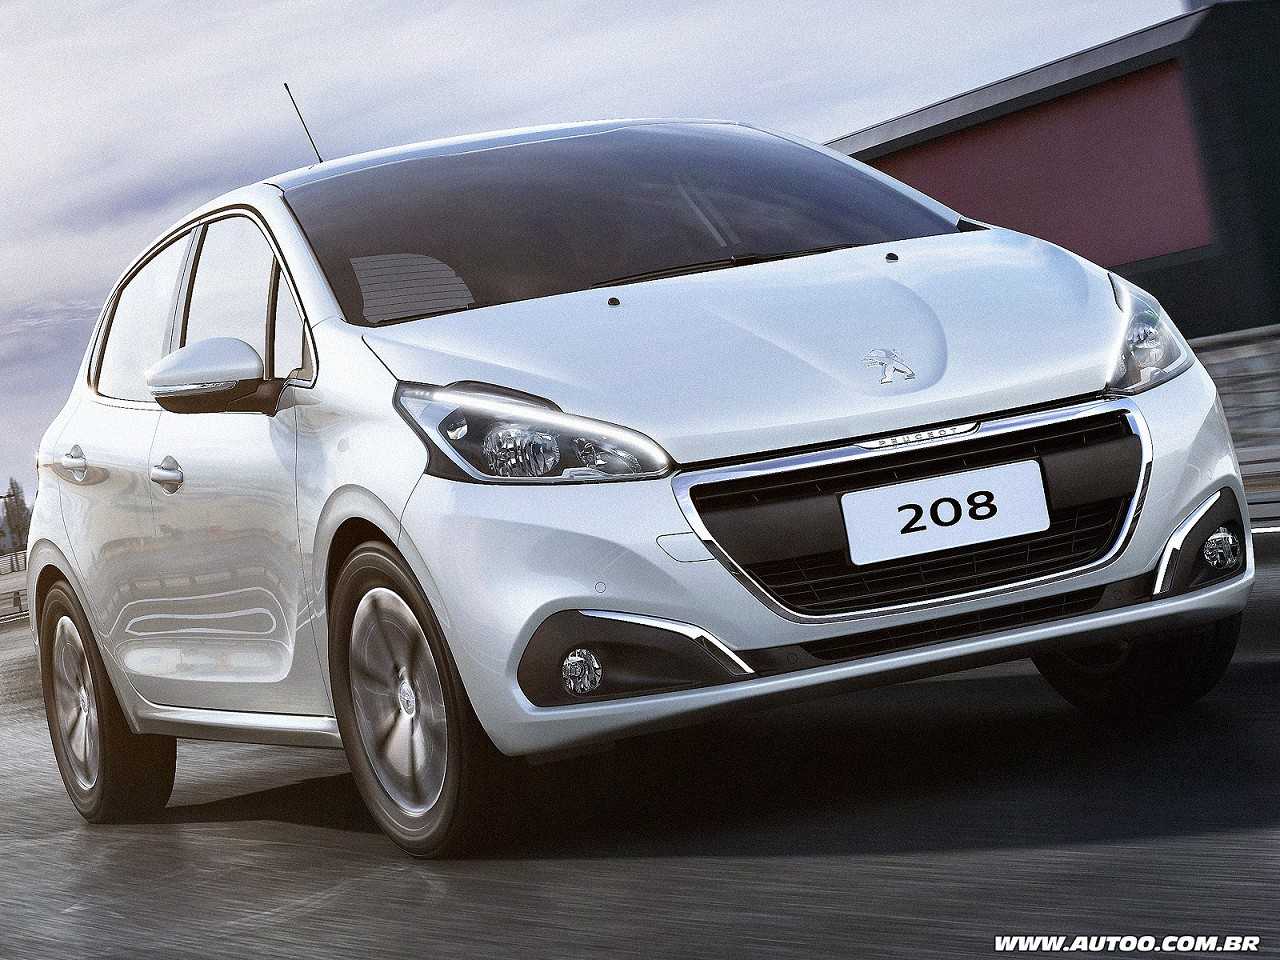 Leitor em dúvida na compra com isenção: Peugeot 208 Allure ou Chevrolet Onix LTZ?